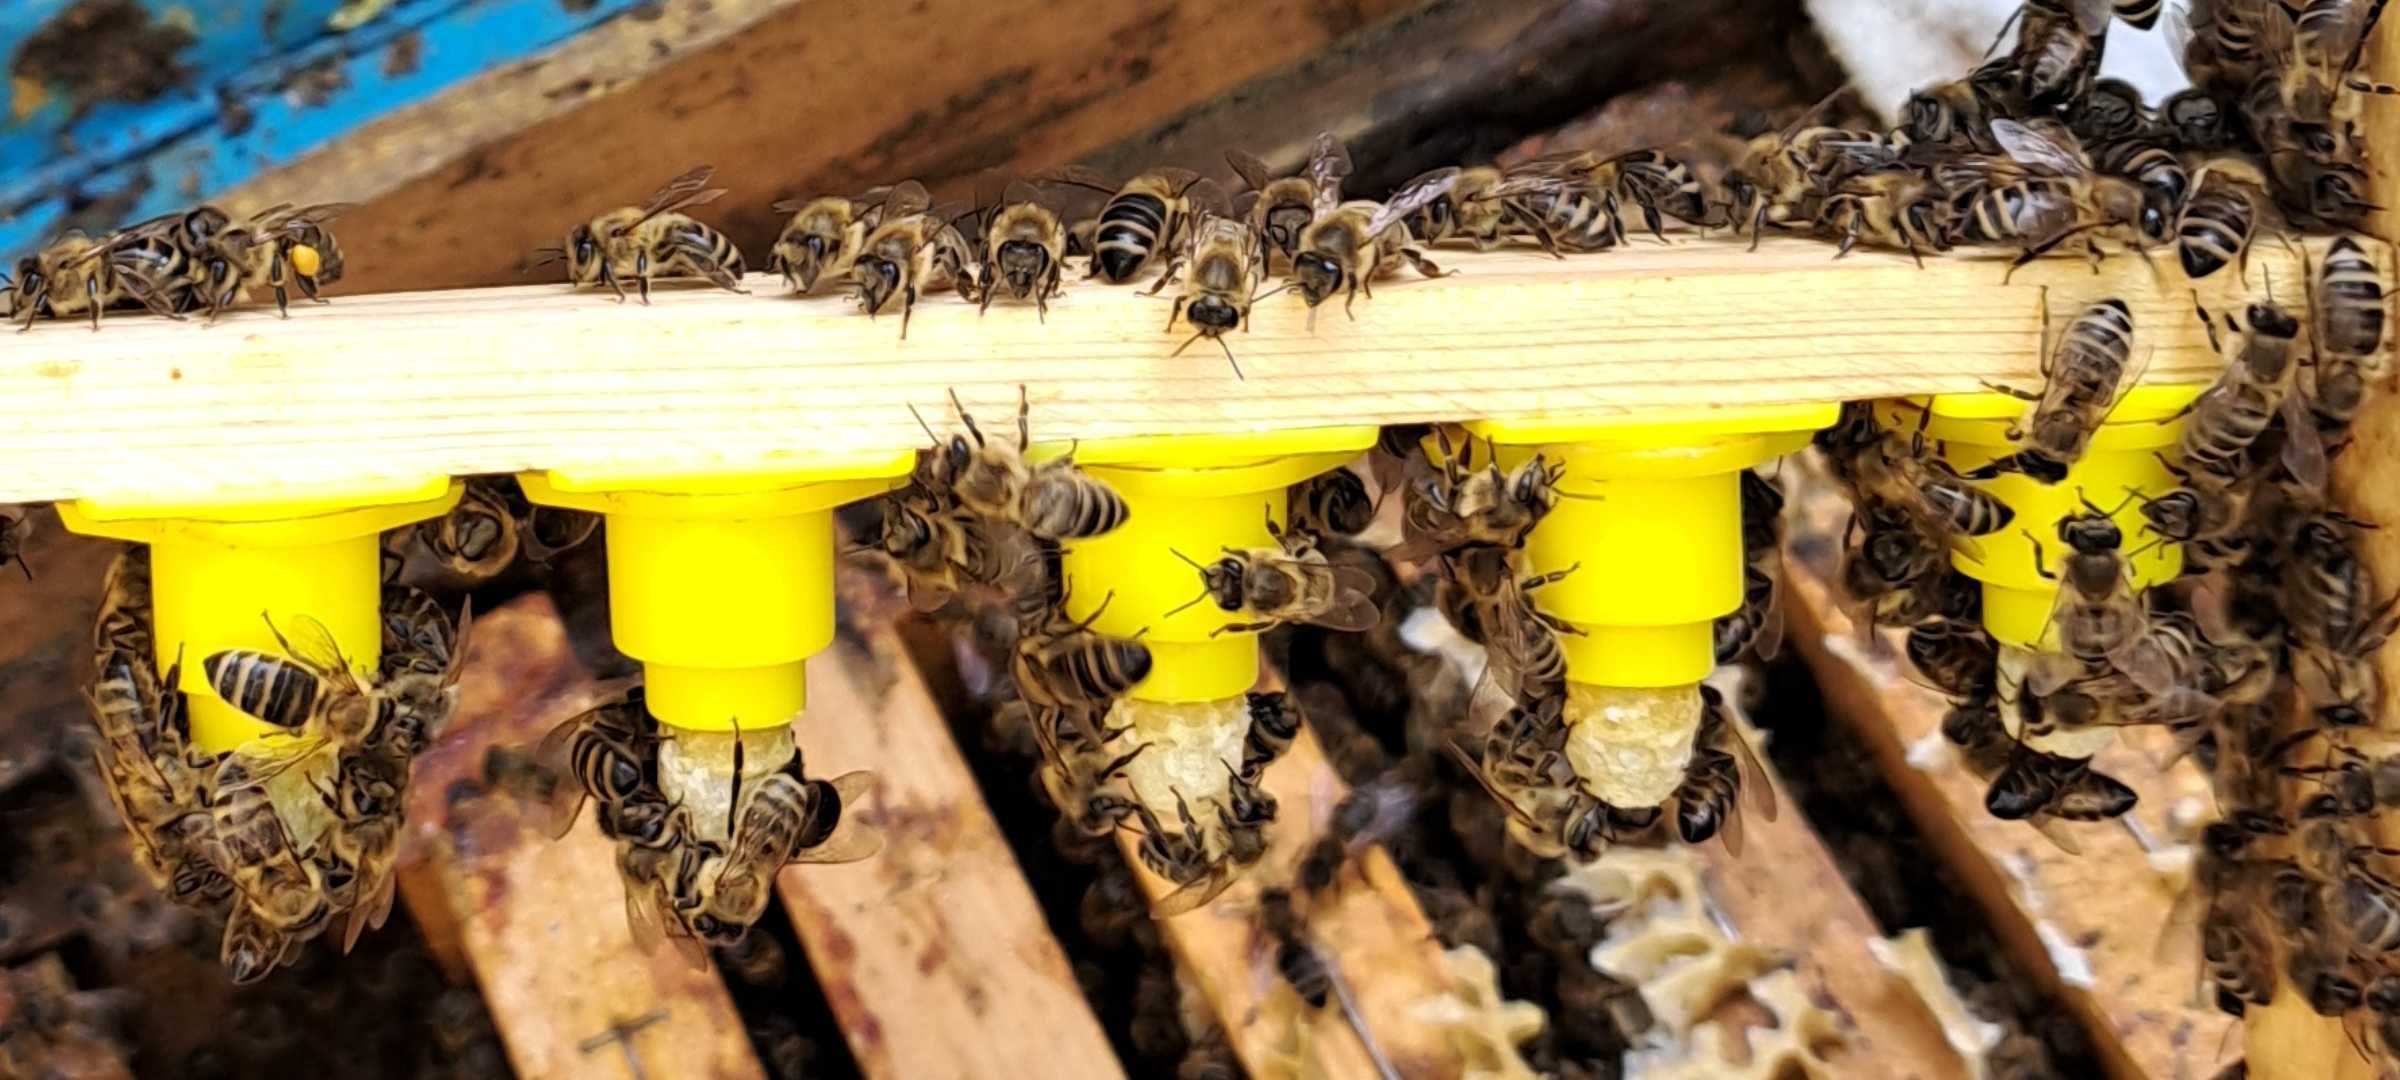 Бджолопакети . Бджоли